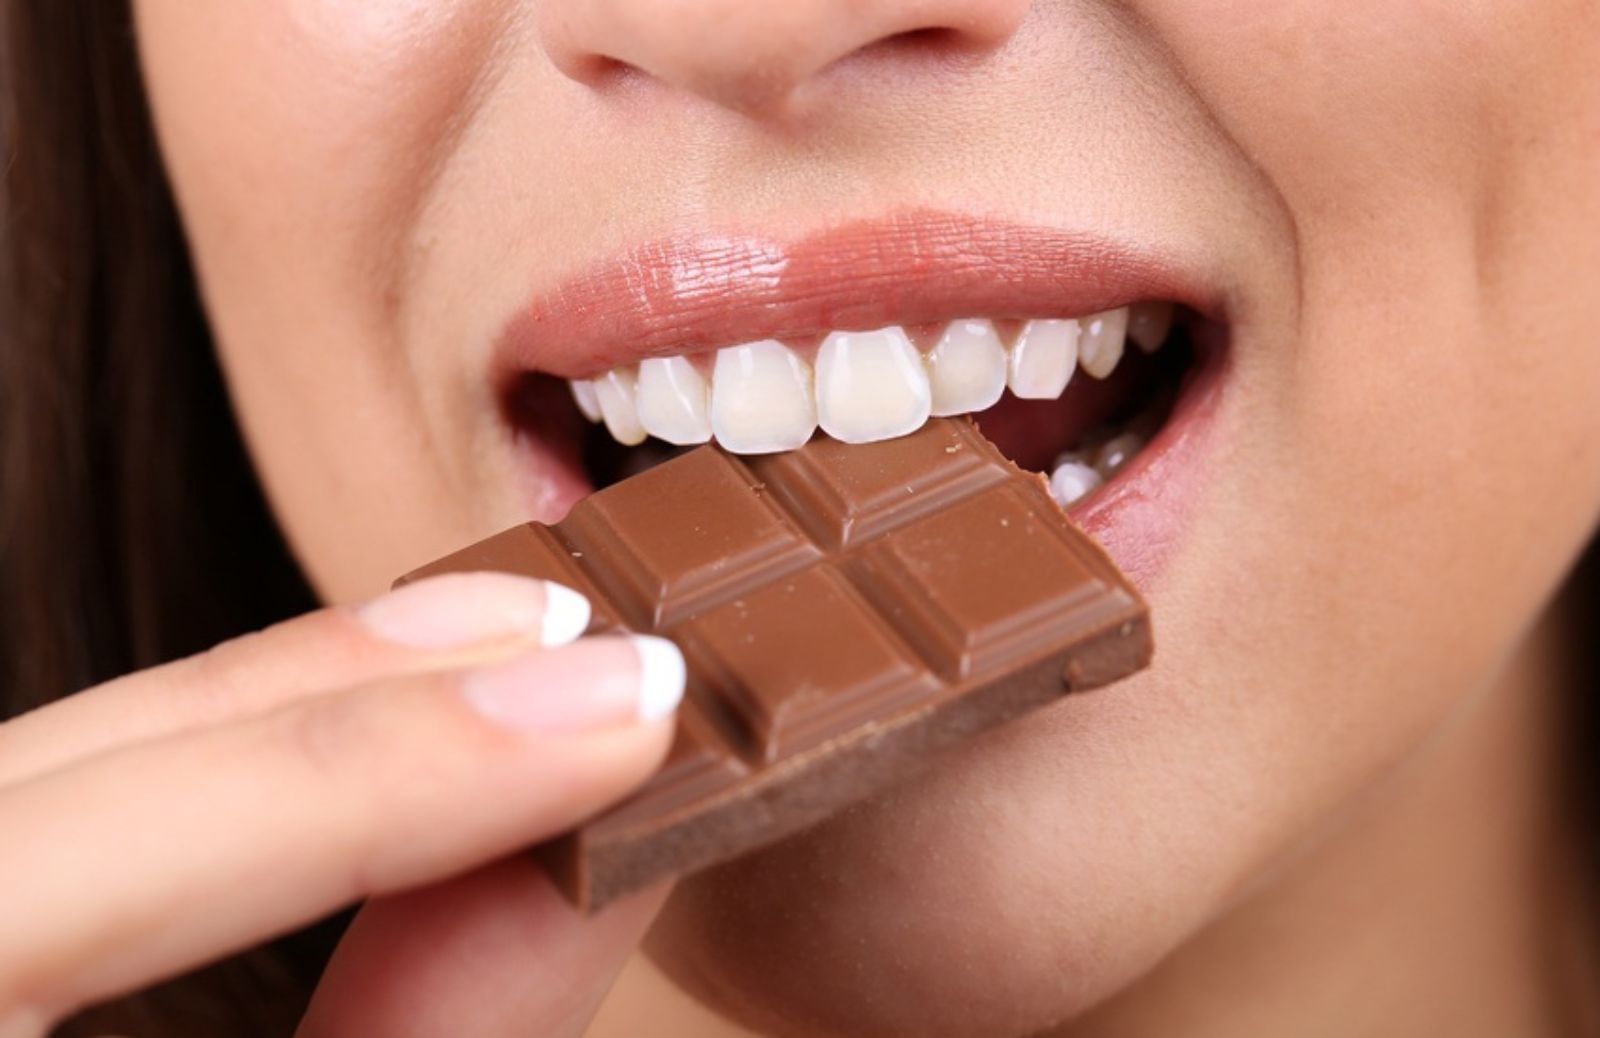 Mangiare cioccolata fa venire i brufoli?